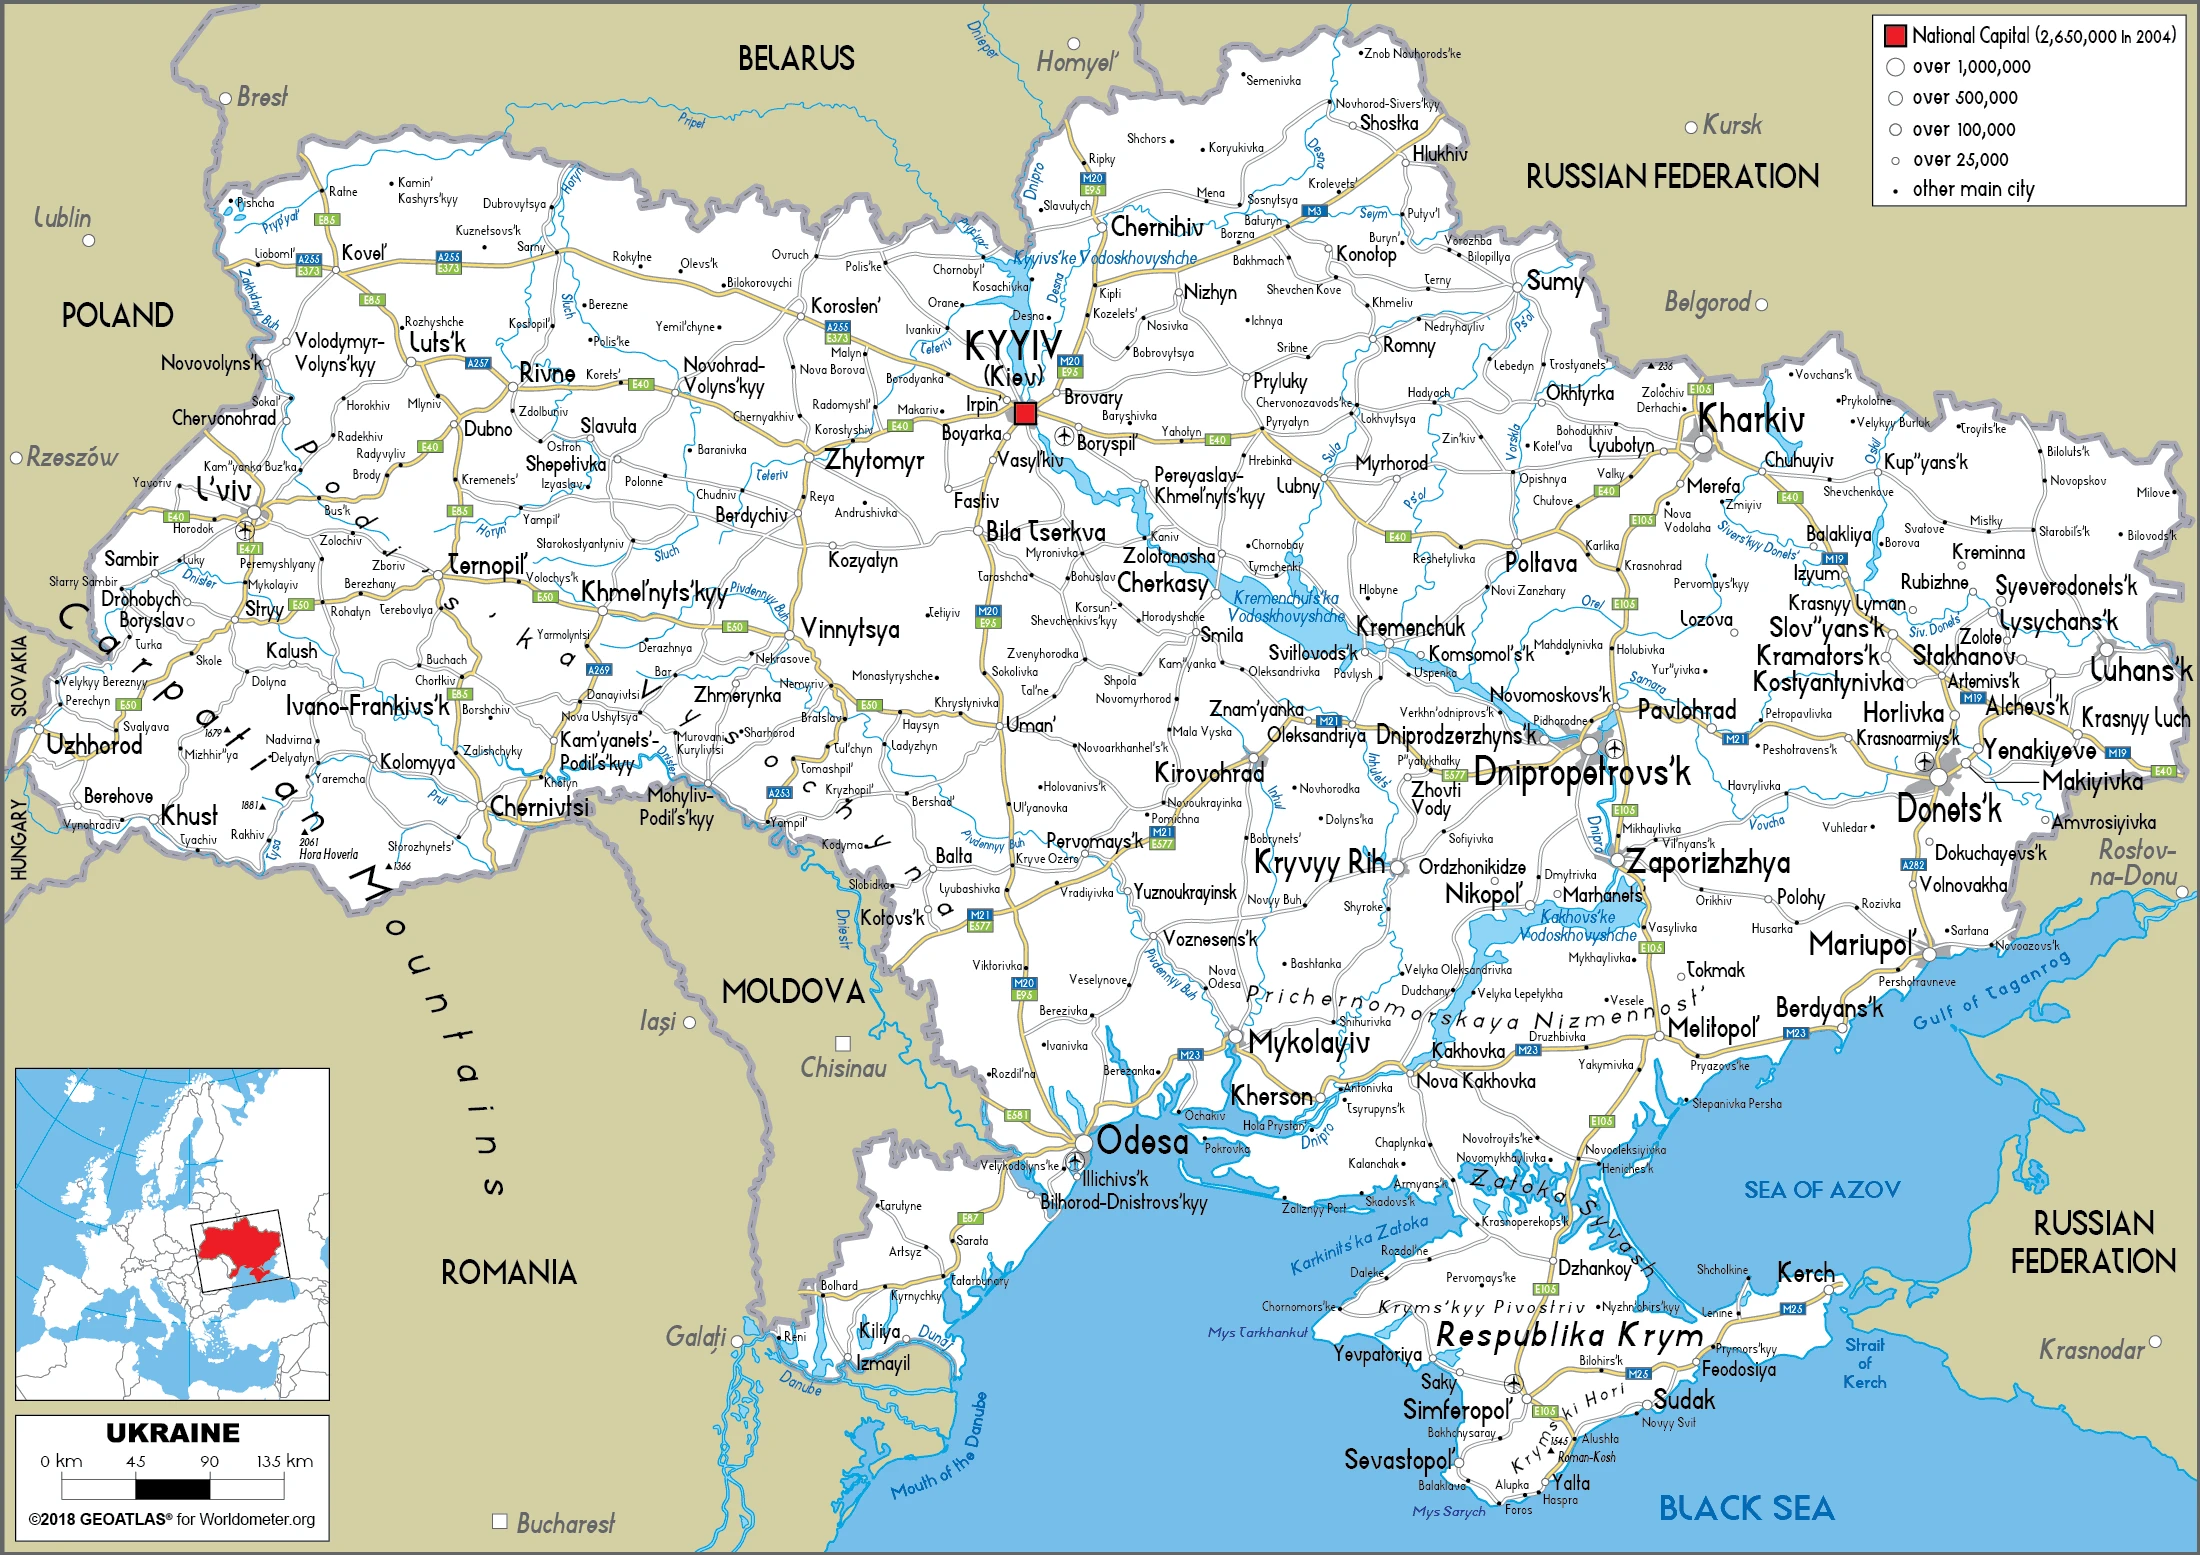 The route plan of the Ukrainian roadways.